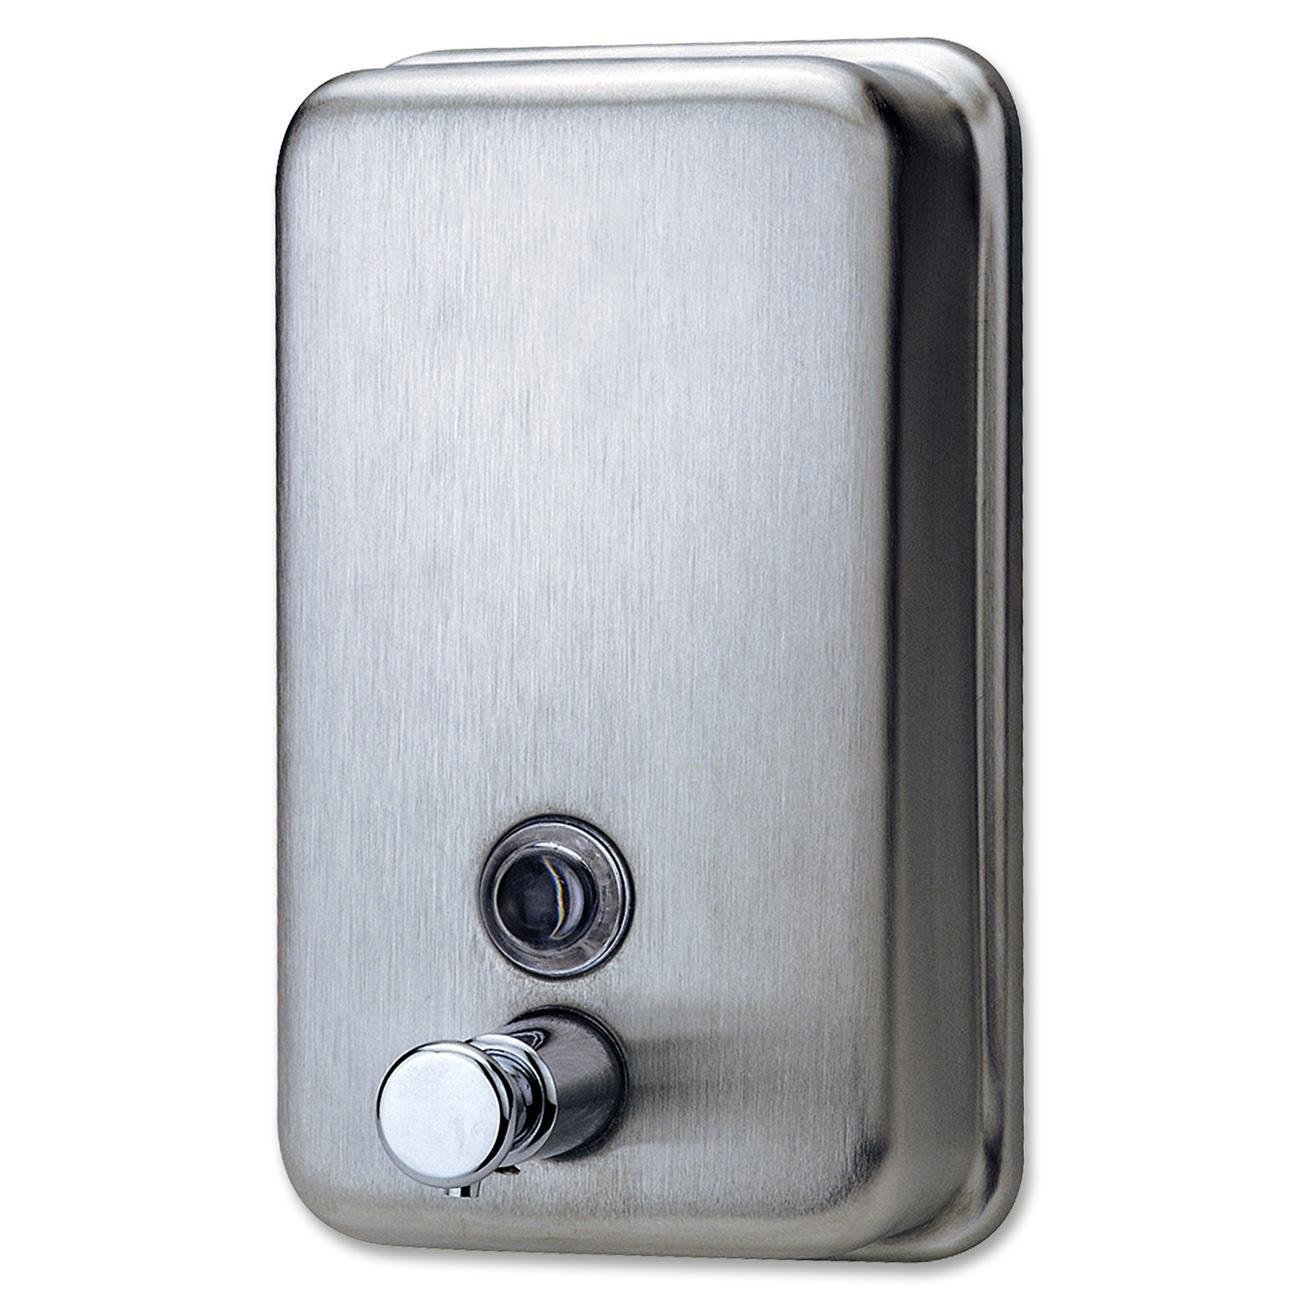 Genuine Stainless Wall-mount Soap Dispenser 31.5 Fluid Oz - 02201